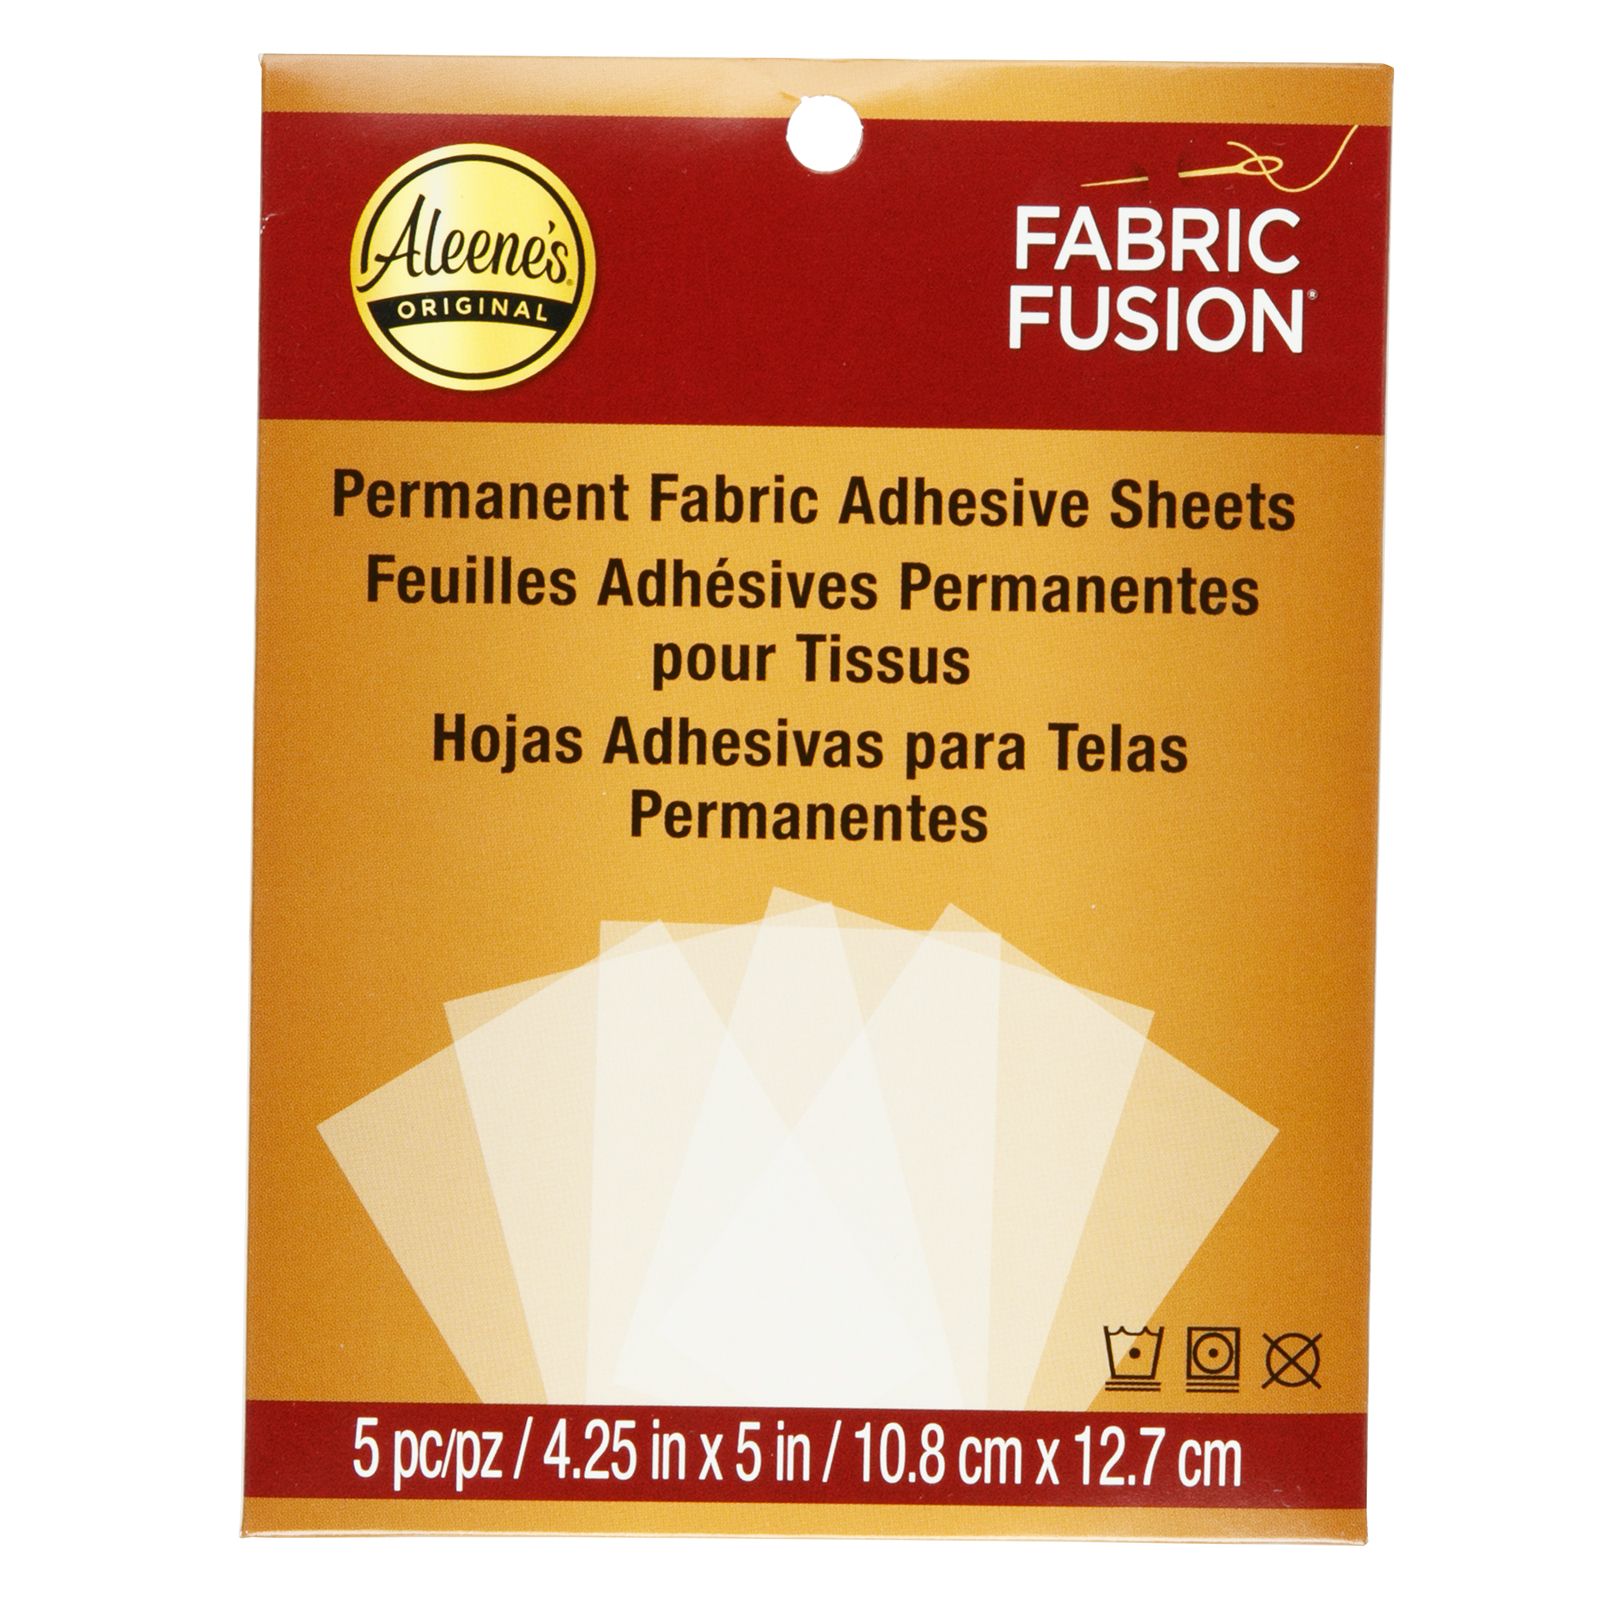 Aleene's • Fabric Fusion Permanent klevende vellen 5stuks